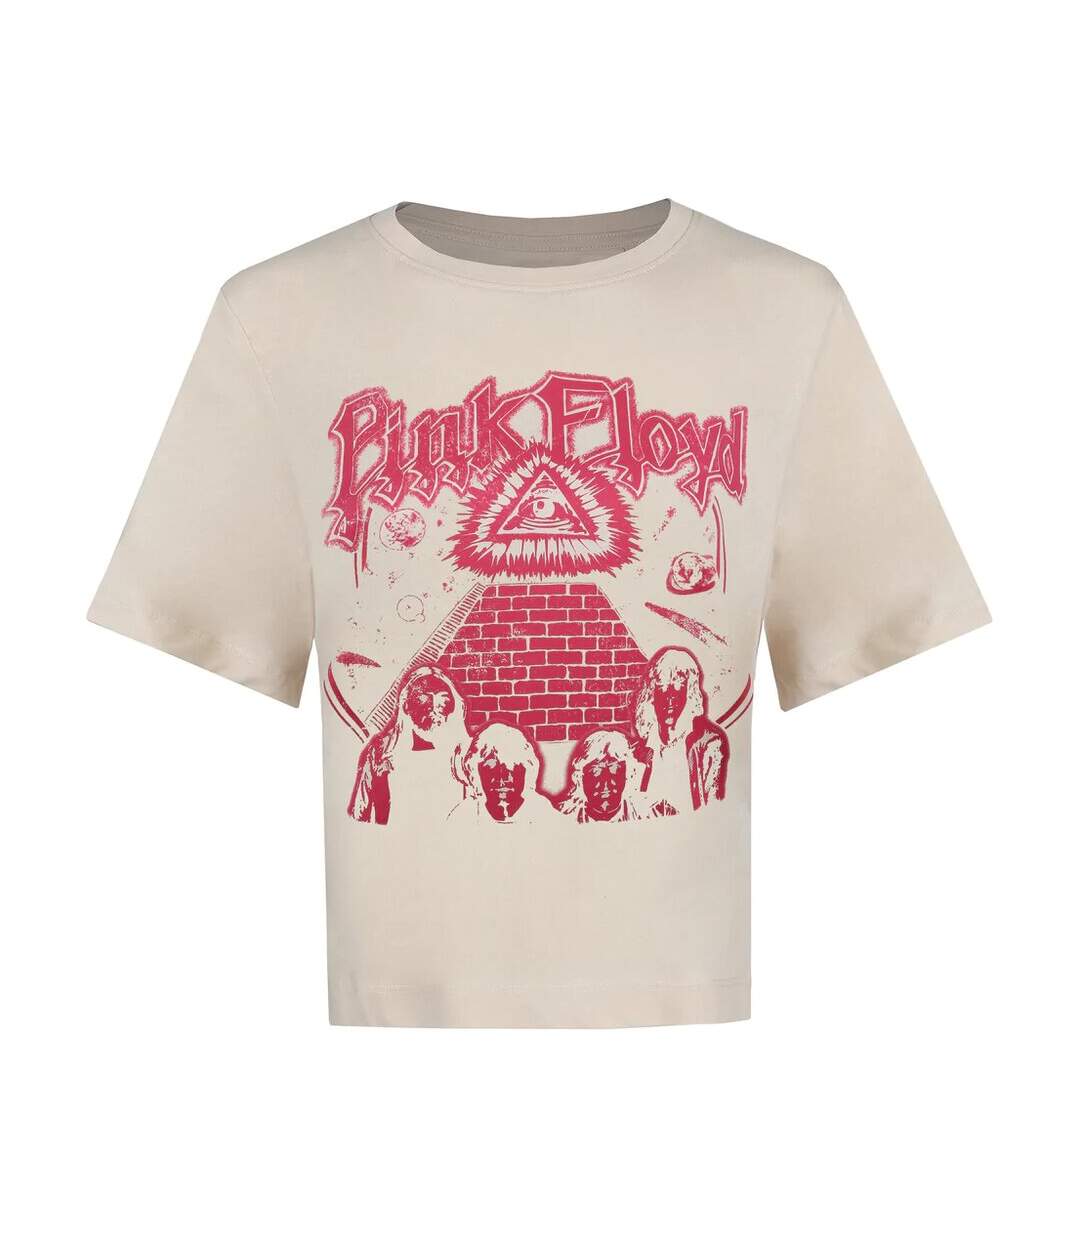 Pink Floyd - T-shirt court ALL SEEING EYE - Femme (Beige) - UTTV848